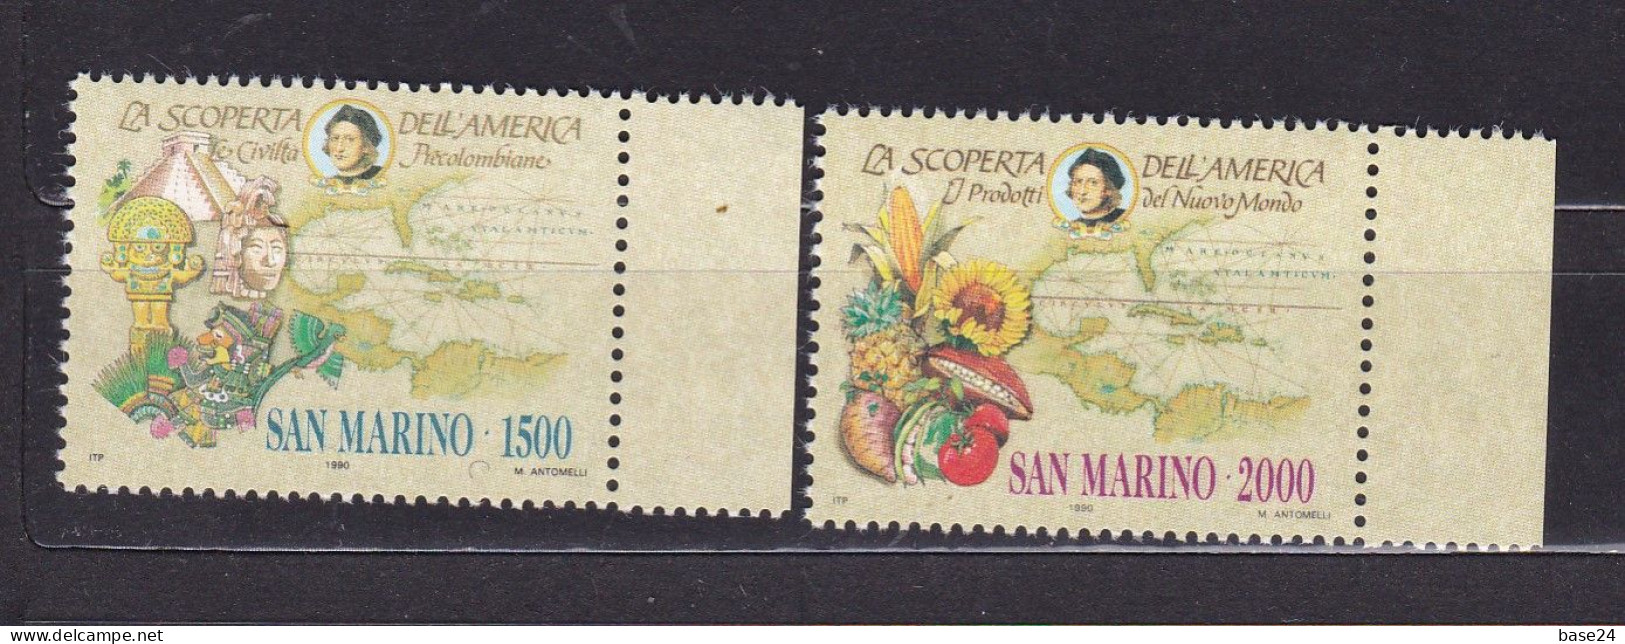 1990 San Marino Saint Marin SCOPERTA DELL'AMERICA, COLOMBO, DISCOVERY OF AMERICA Serie Di 2 Valori MNH** - Christopher Columbus